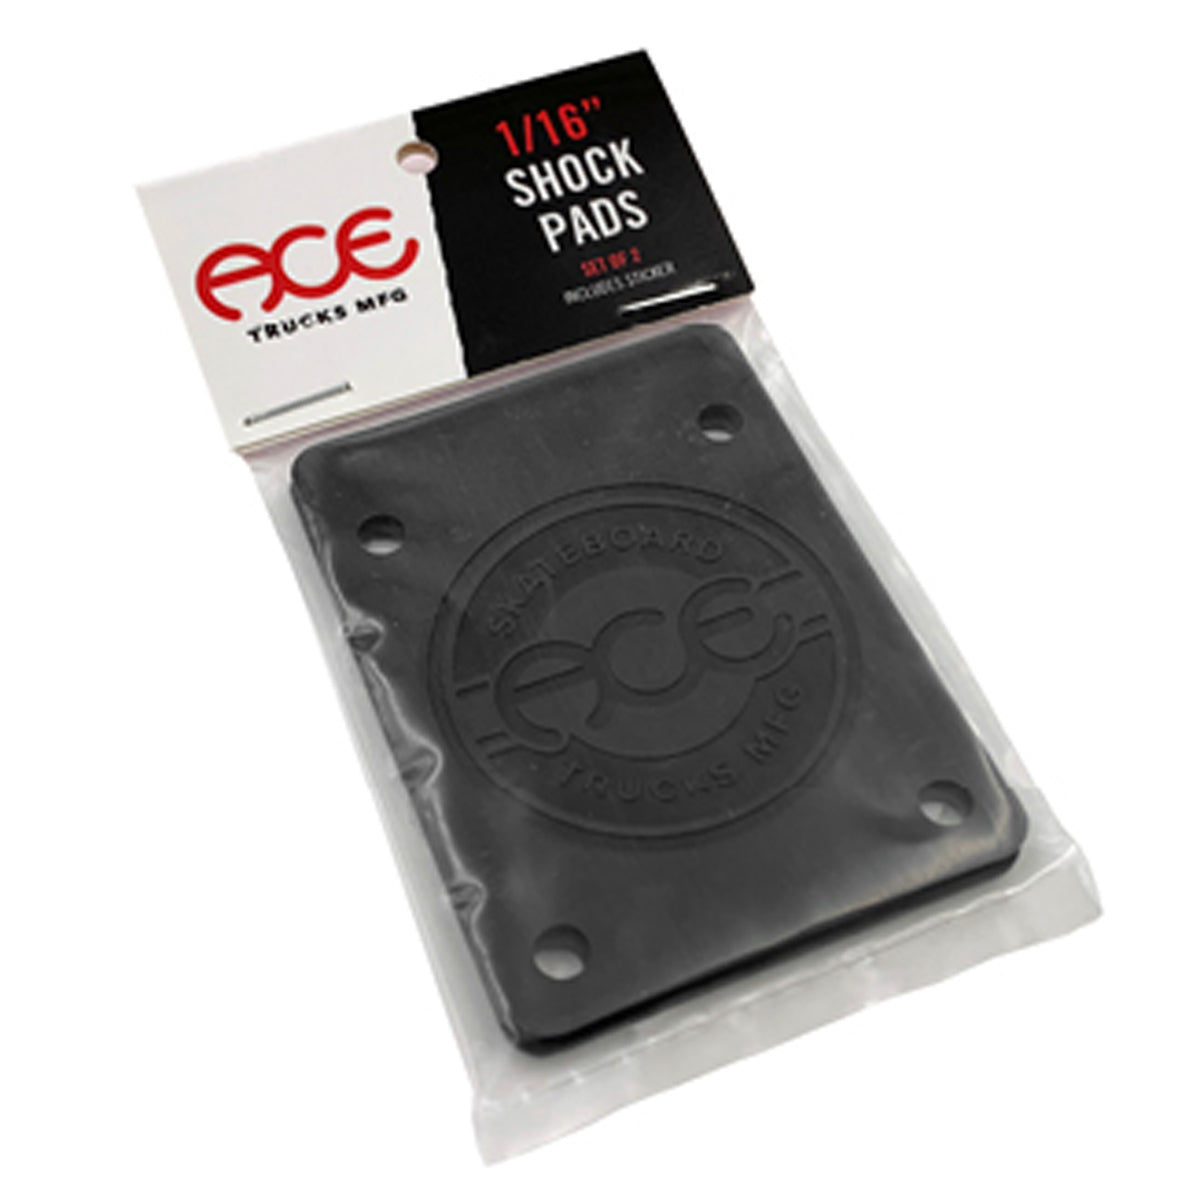 Ace Shock Pads 1/16” - Apple Valley Emporium